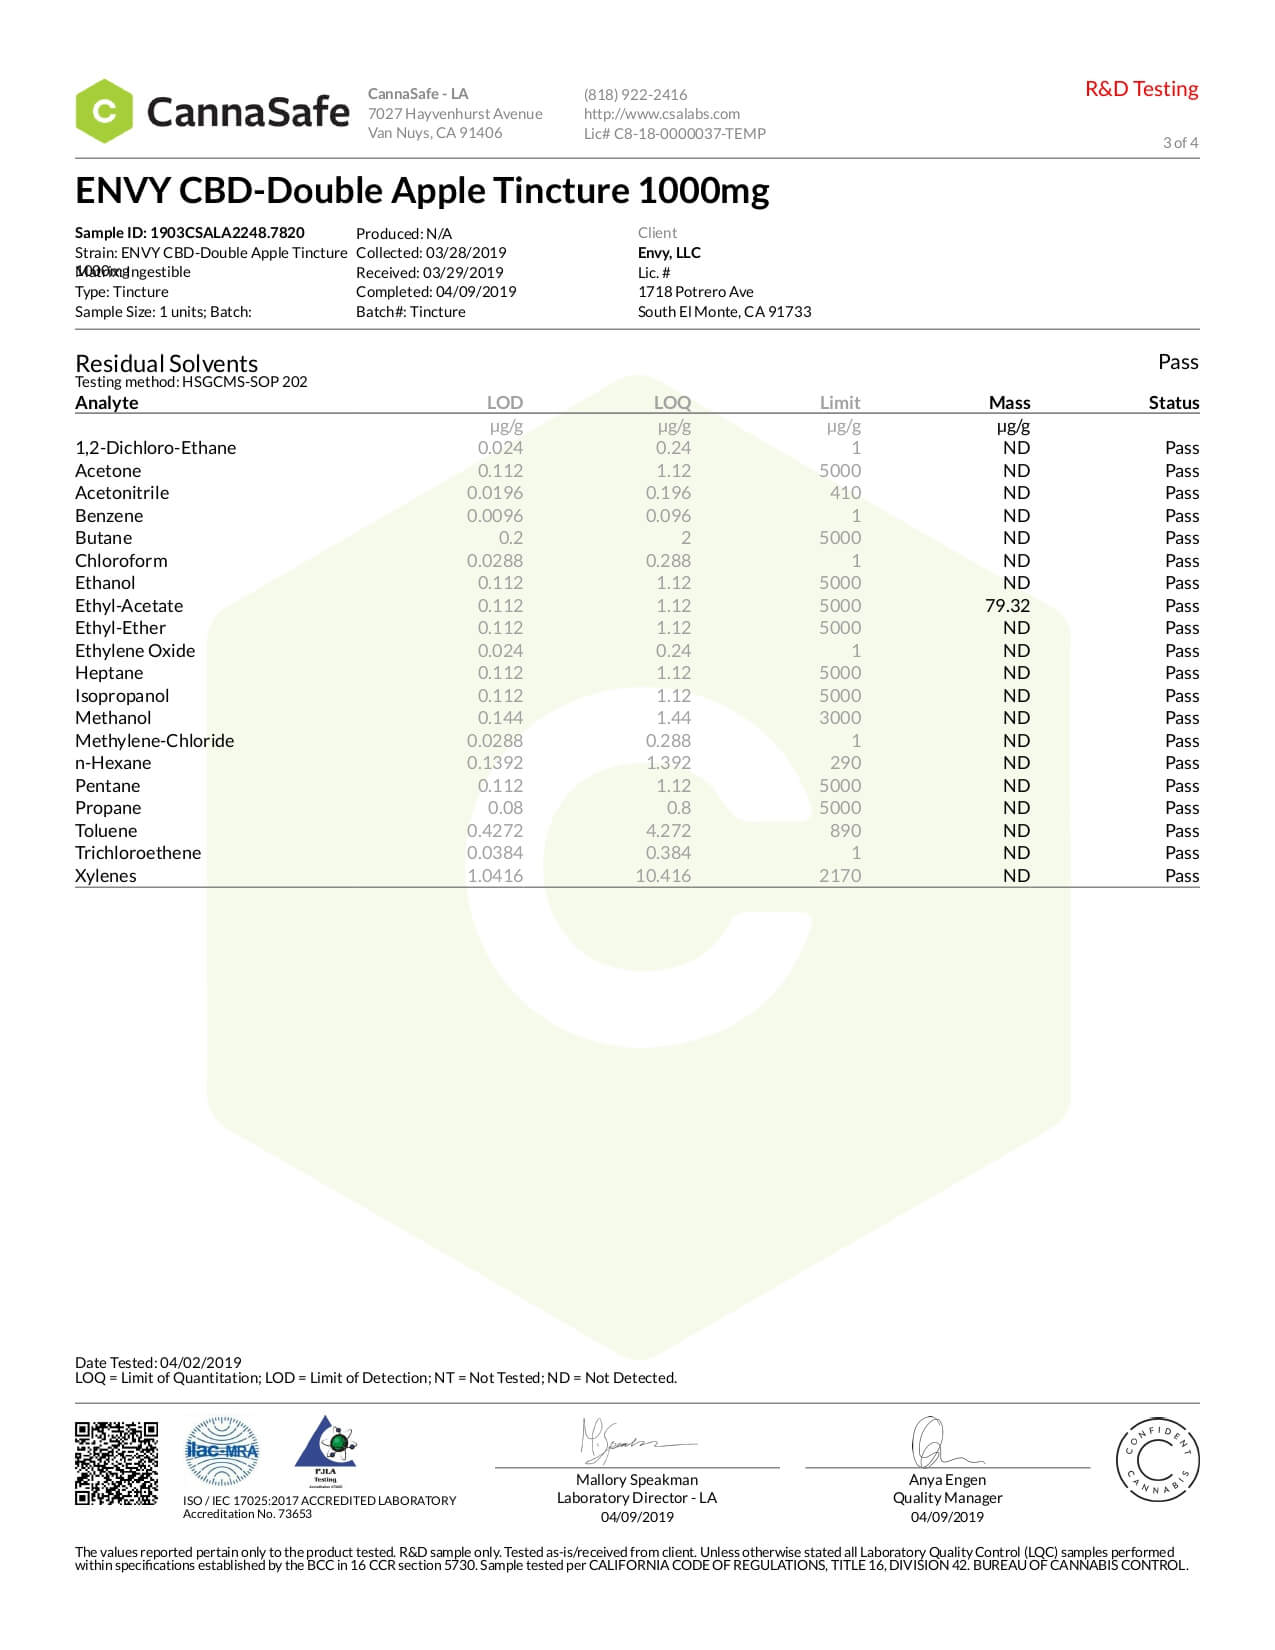 ENVY CBD Tincture Double Apple 1000mg Lab Report